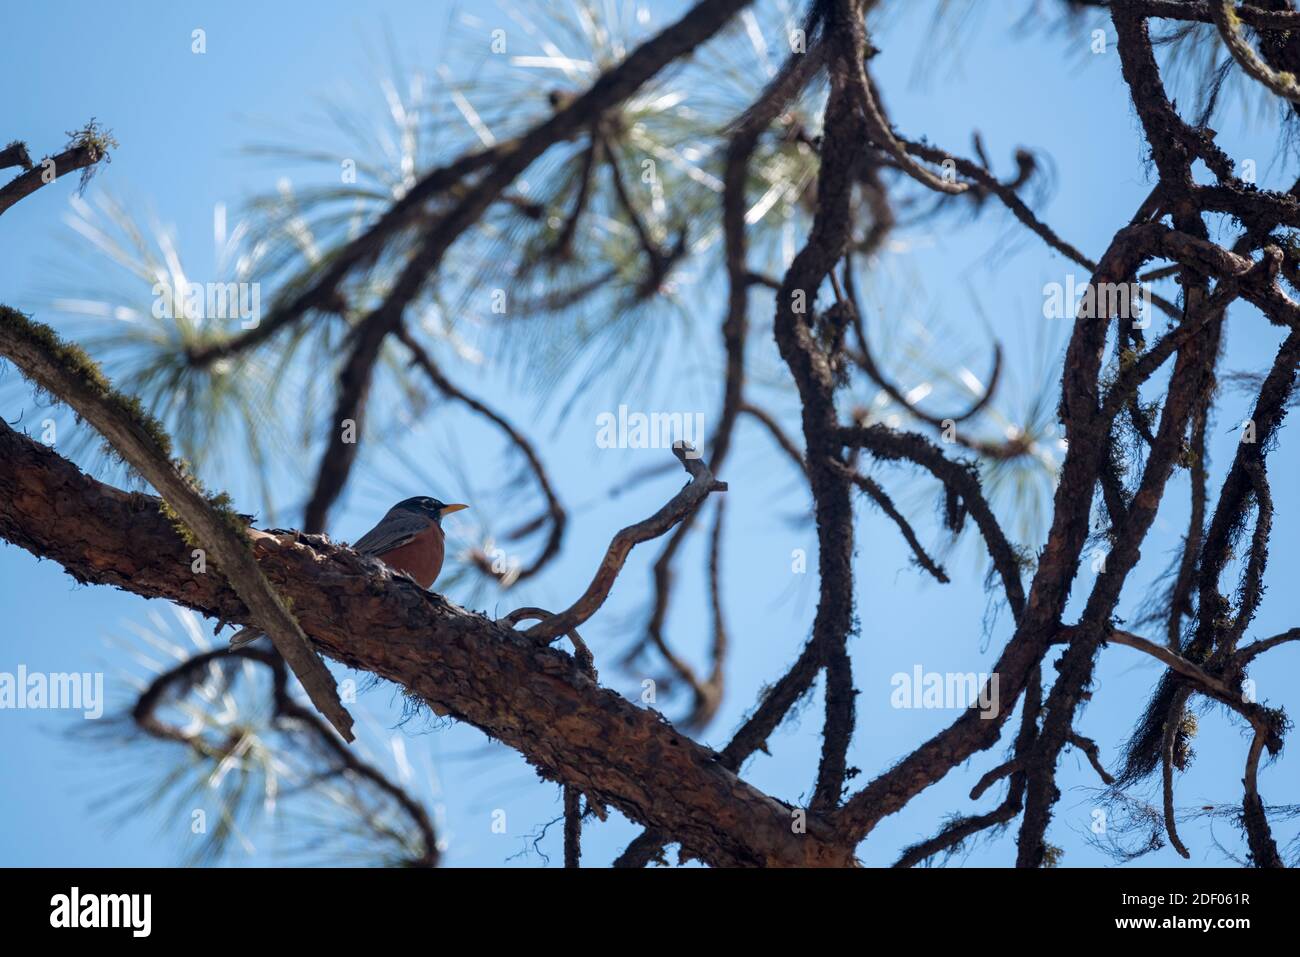 Robin on the branch of Ponderosa pine tree, Wenaha River Canyon, Oregon. Stock Photo